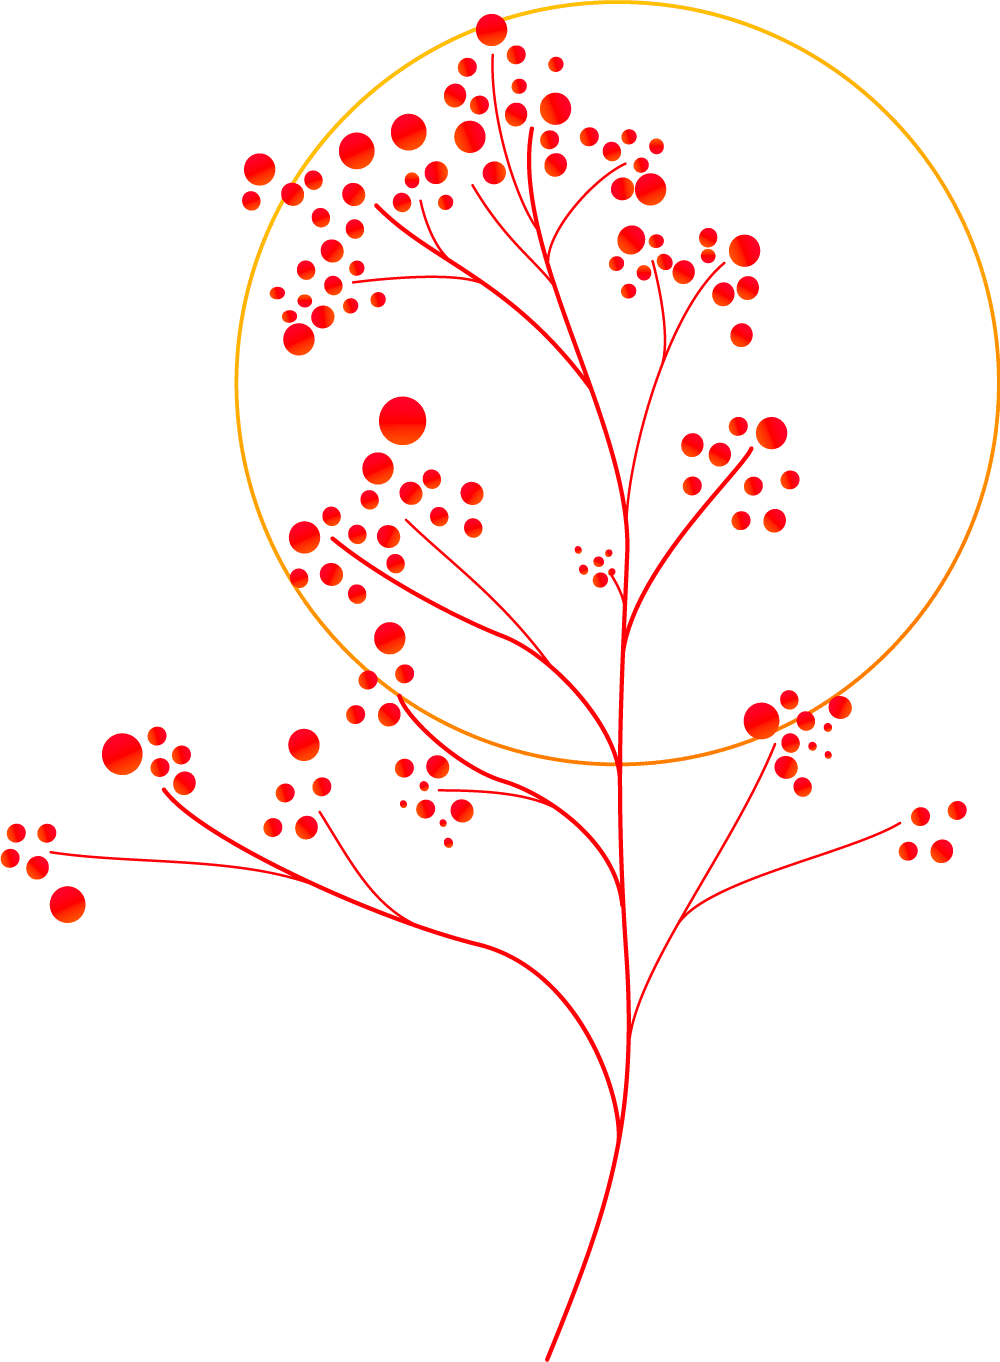 Plants+circles-M19A